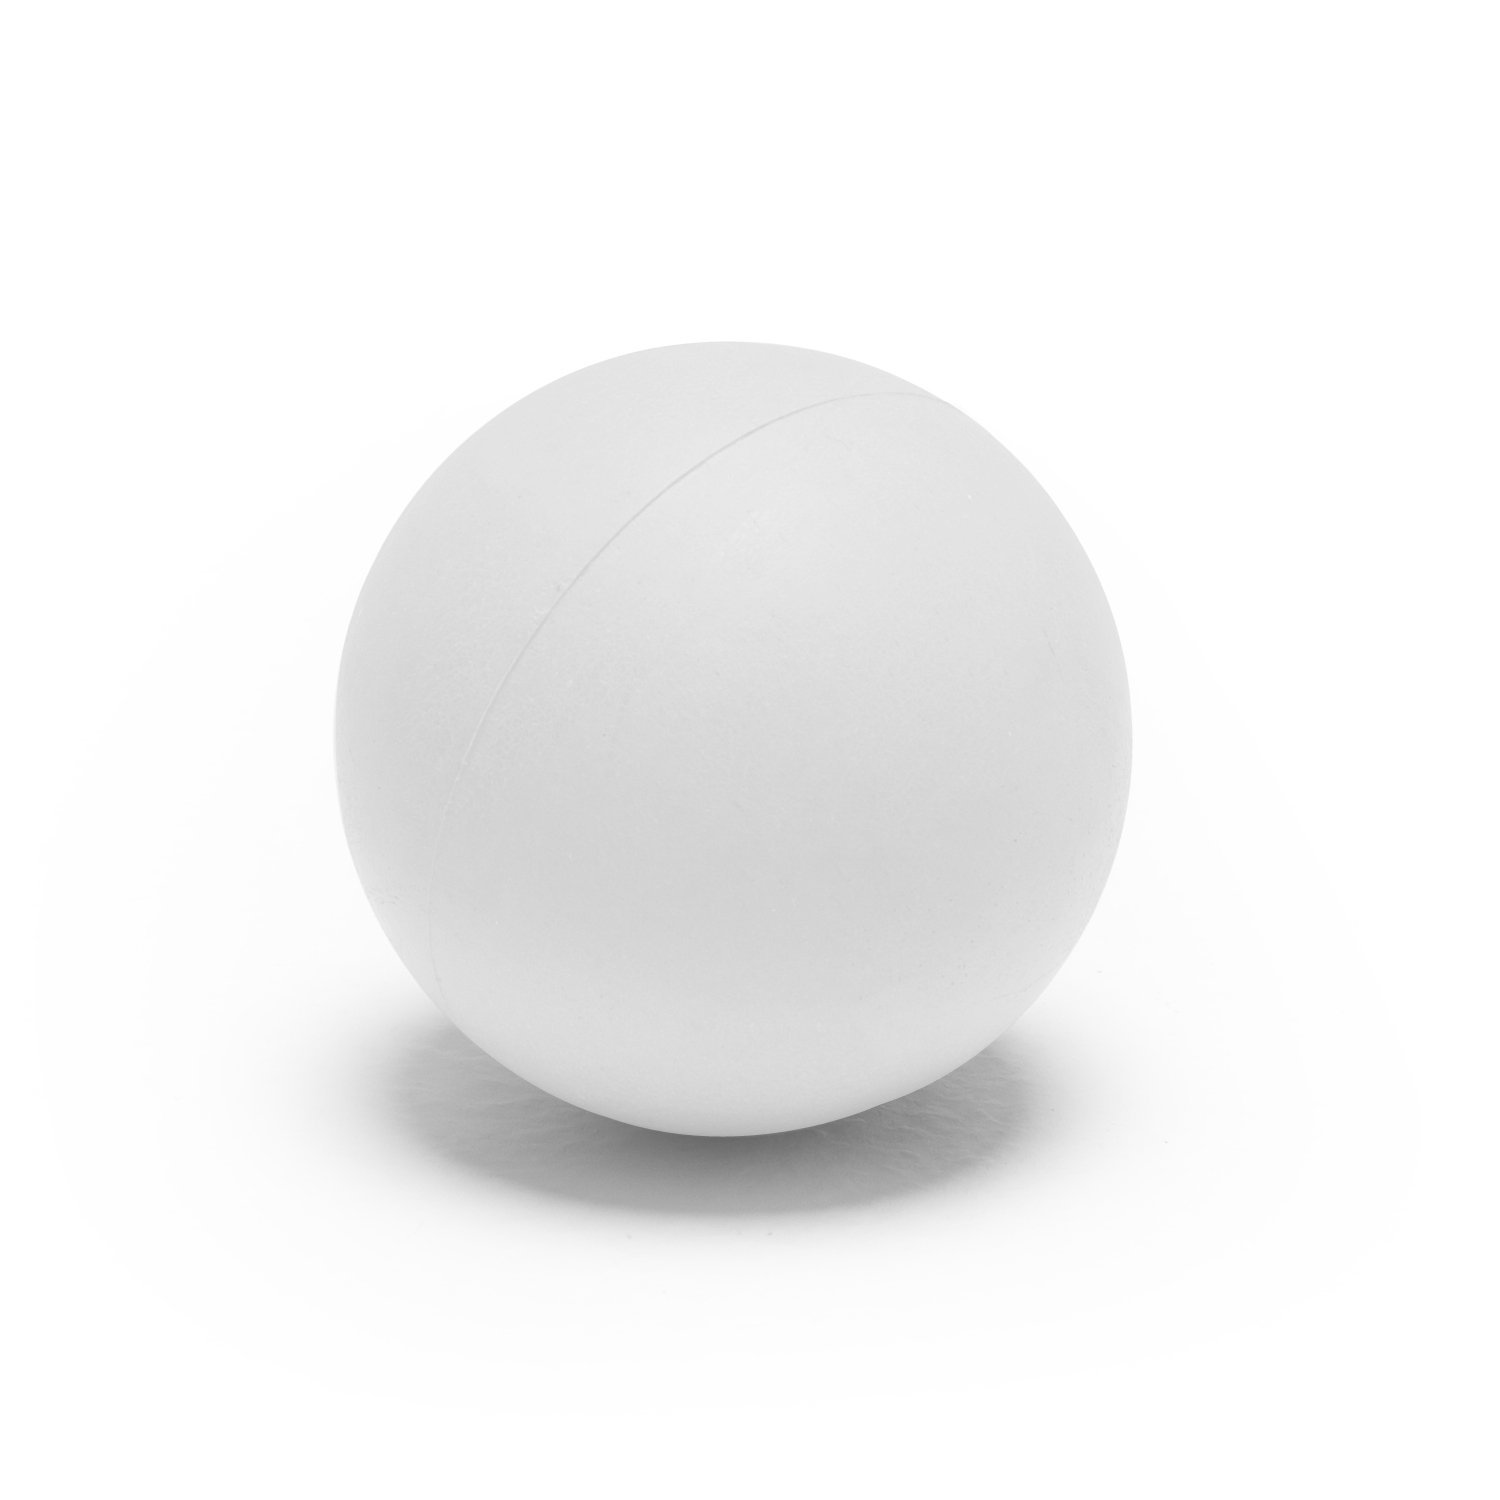 White ball photo